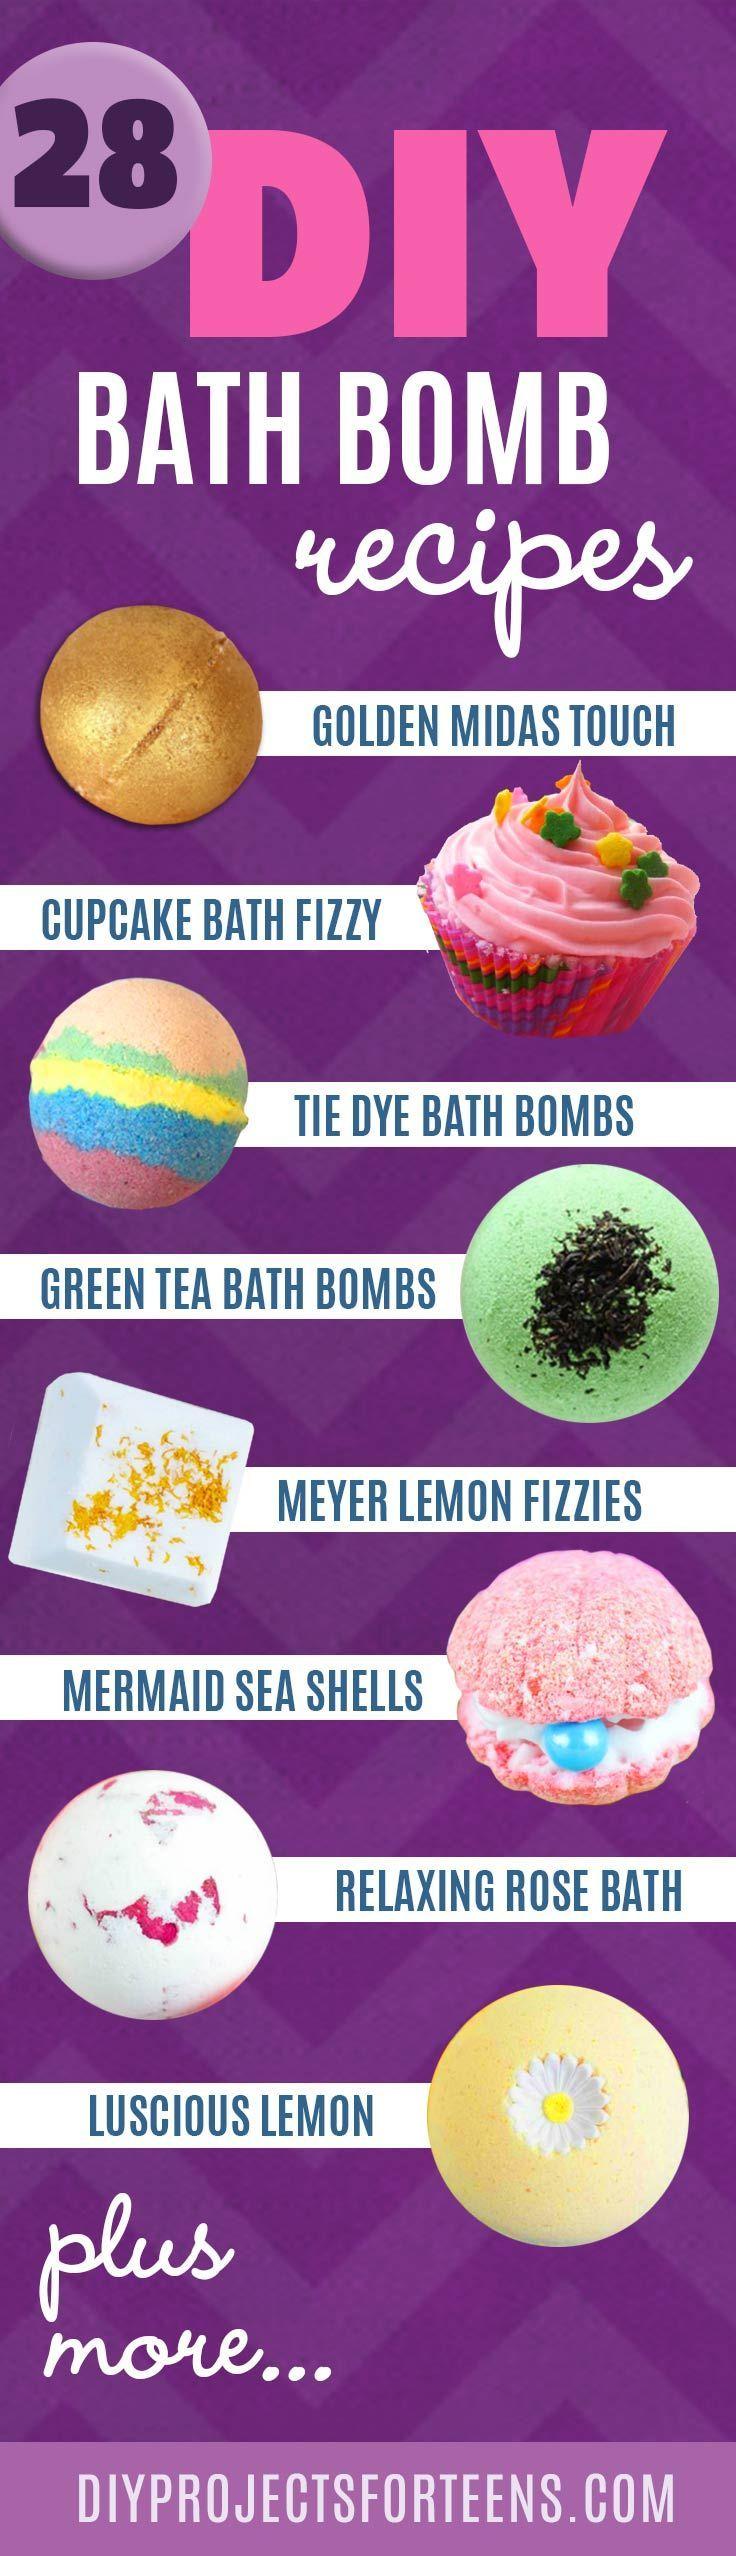 Wedding - The 28 Most Fabulous DIY Bath Bomb Recipes Ever